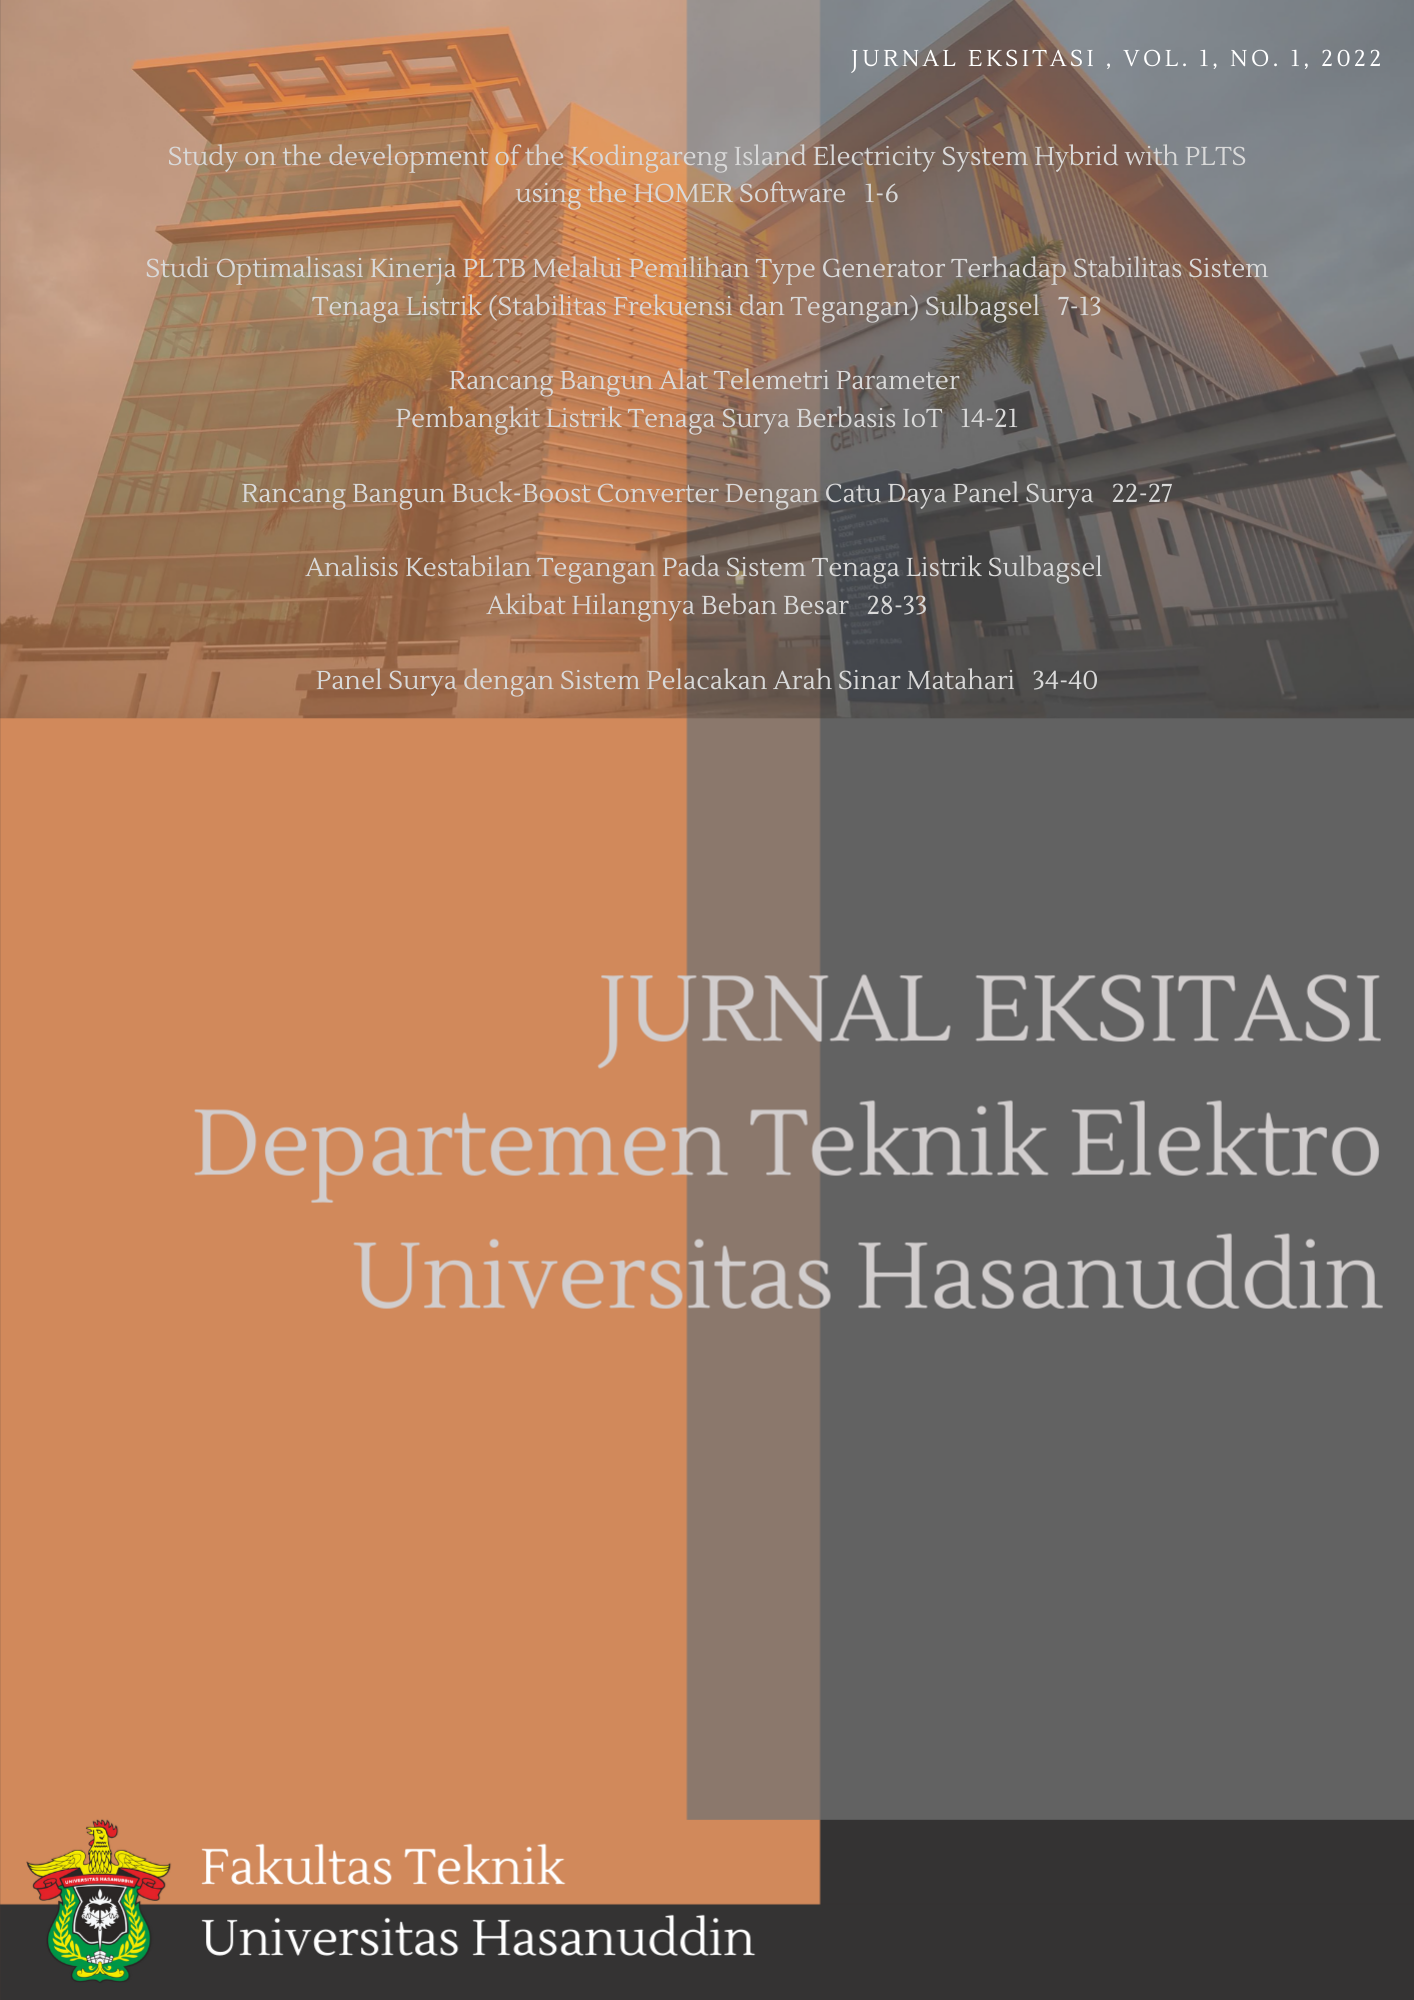 					Lihat Vol 1 No 1 (2022): Jurnal Eksitasi Departemen Teknik Elektro. Vol. 1. No. 1. 2022
				